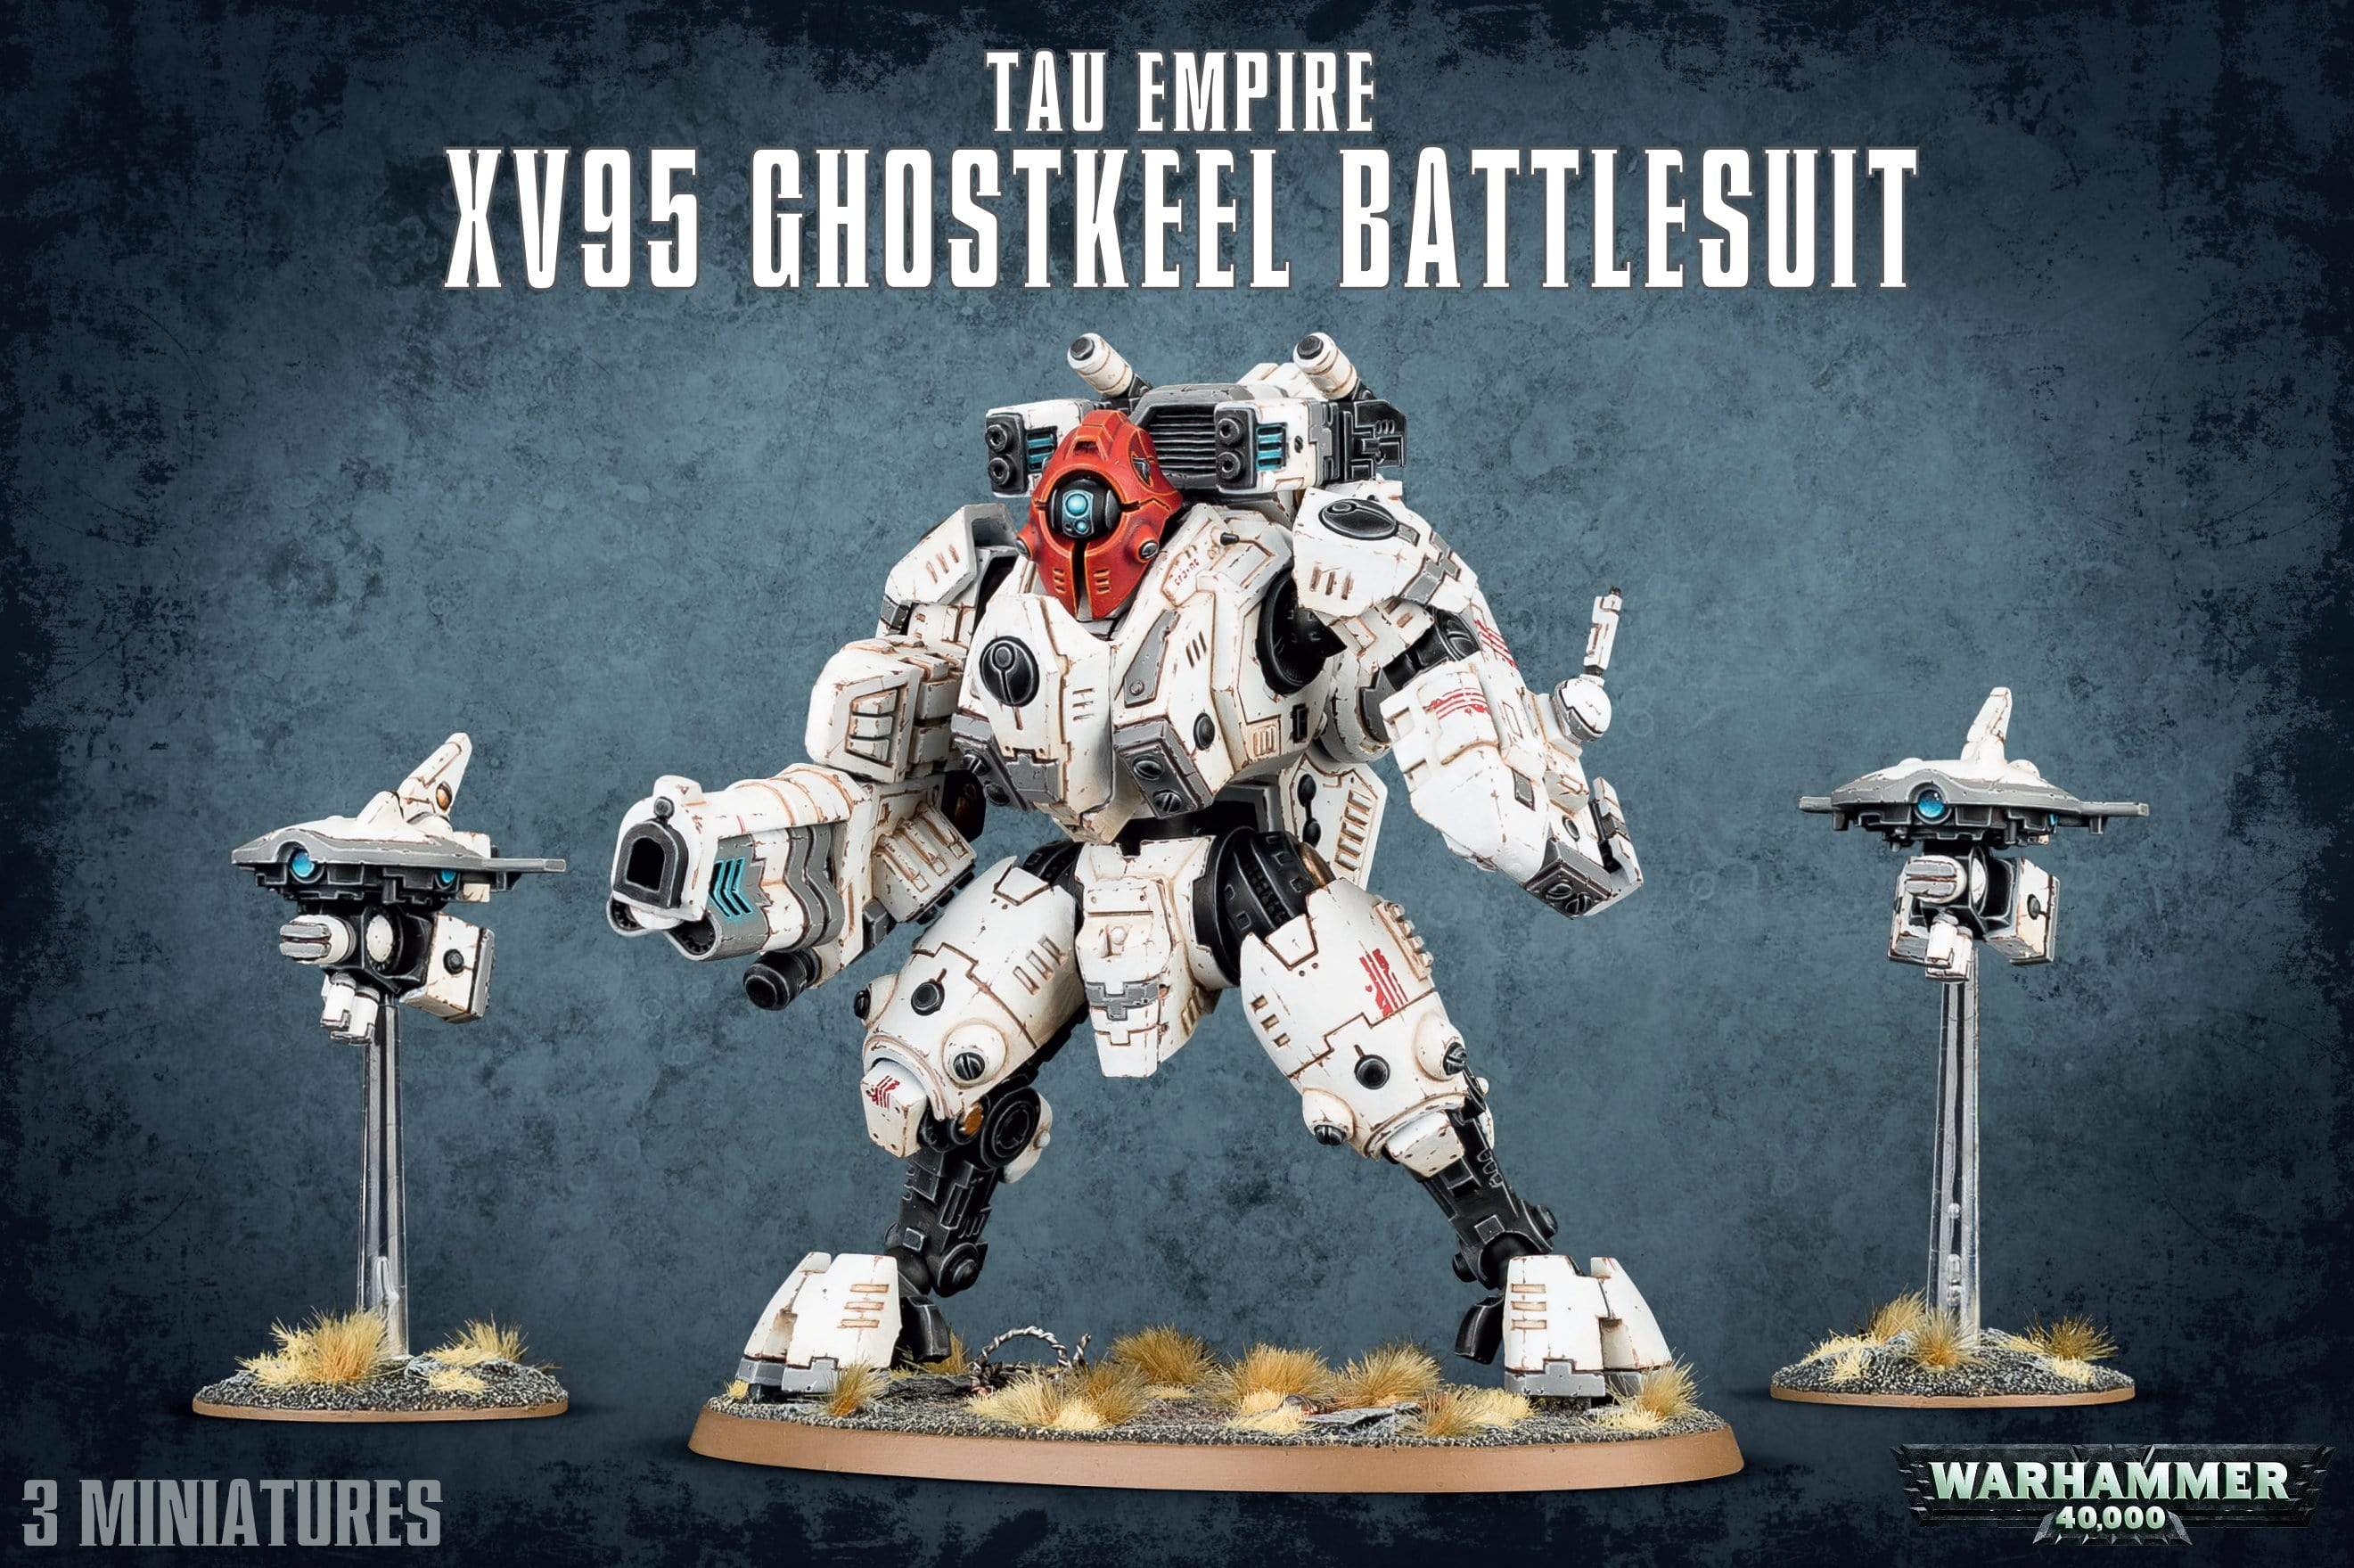 T'AU Empire: Ghostkeel Battlesuit - Saltire Games